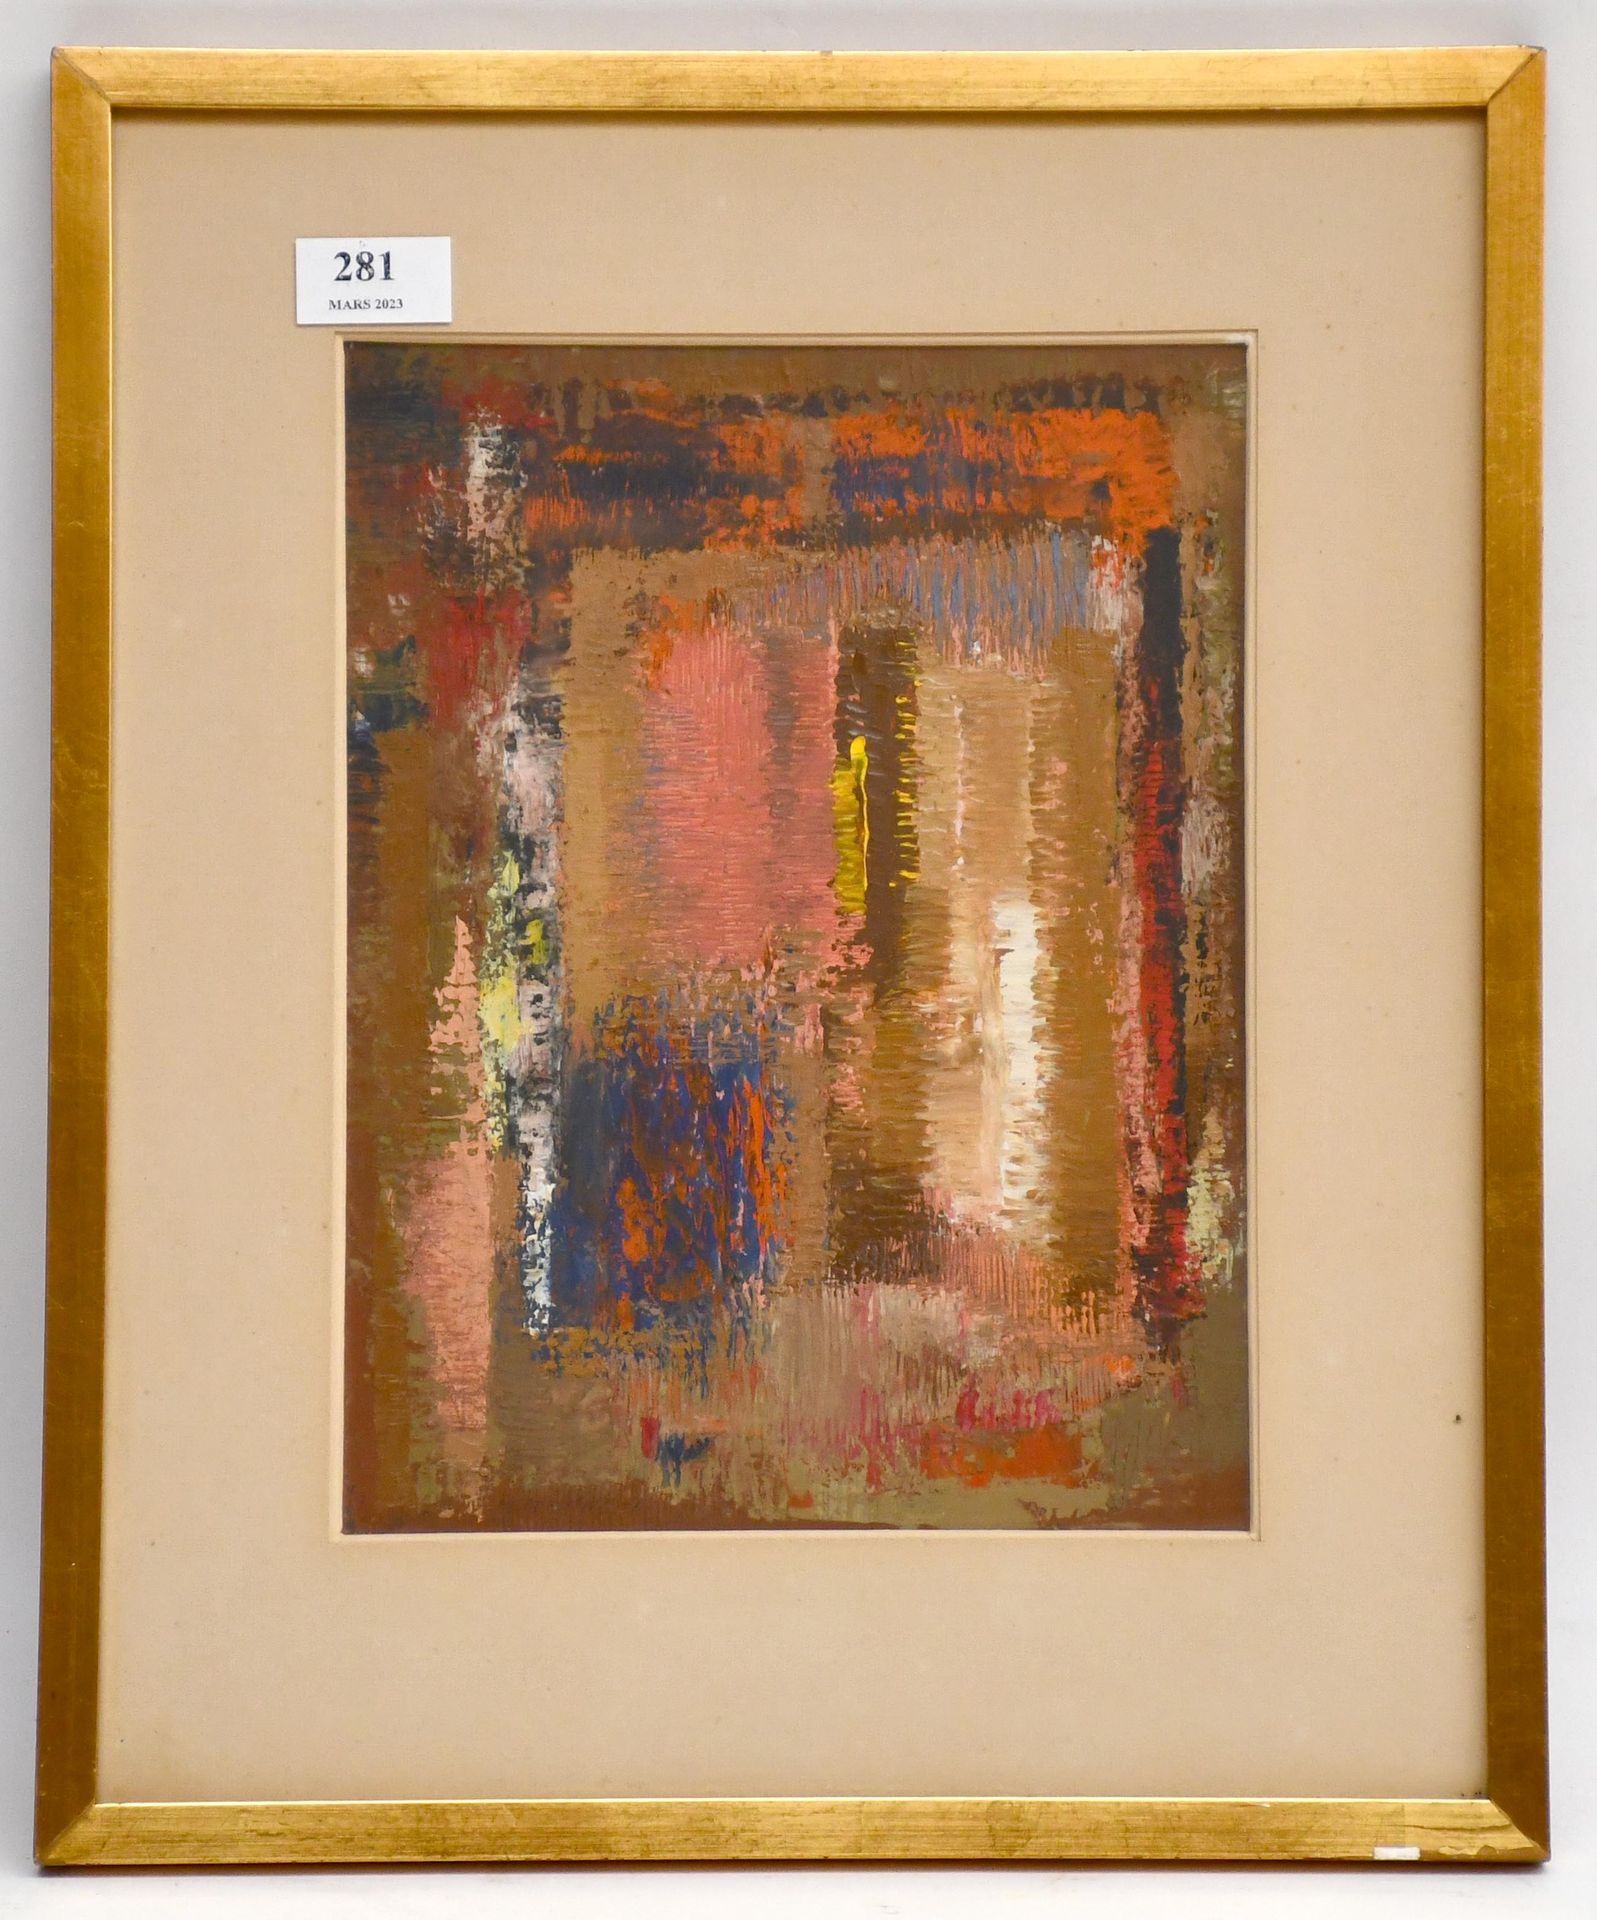 Null Marcel Dumont
Composition in oil. Estate of the artist. Not signed. Dimensi&hellip;